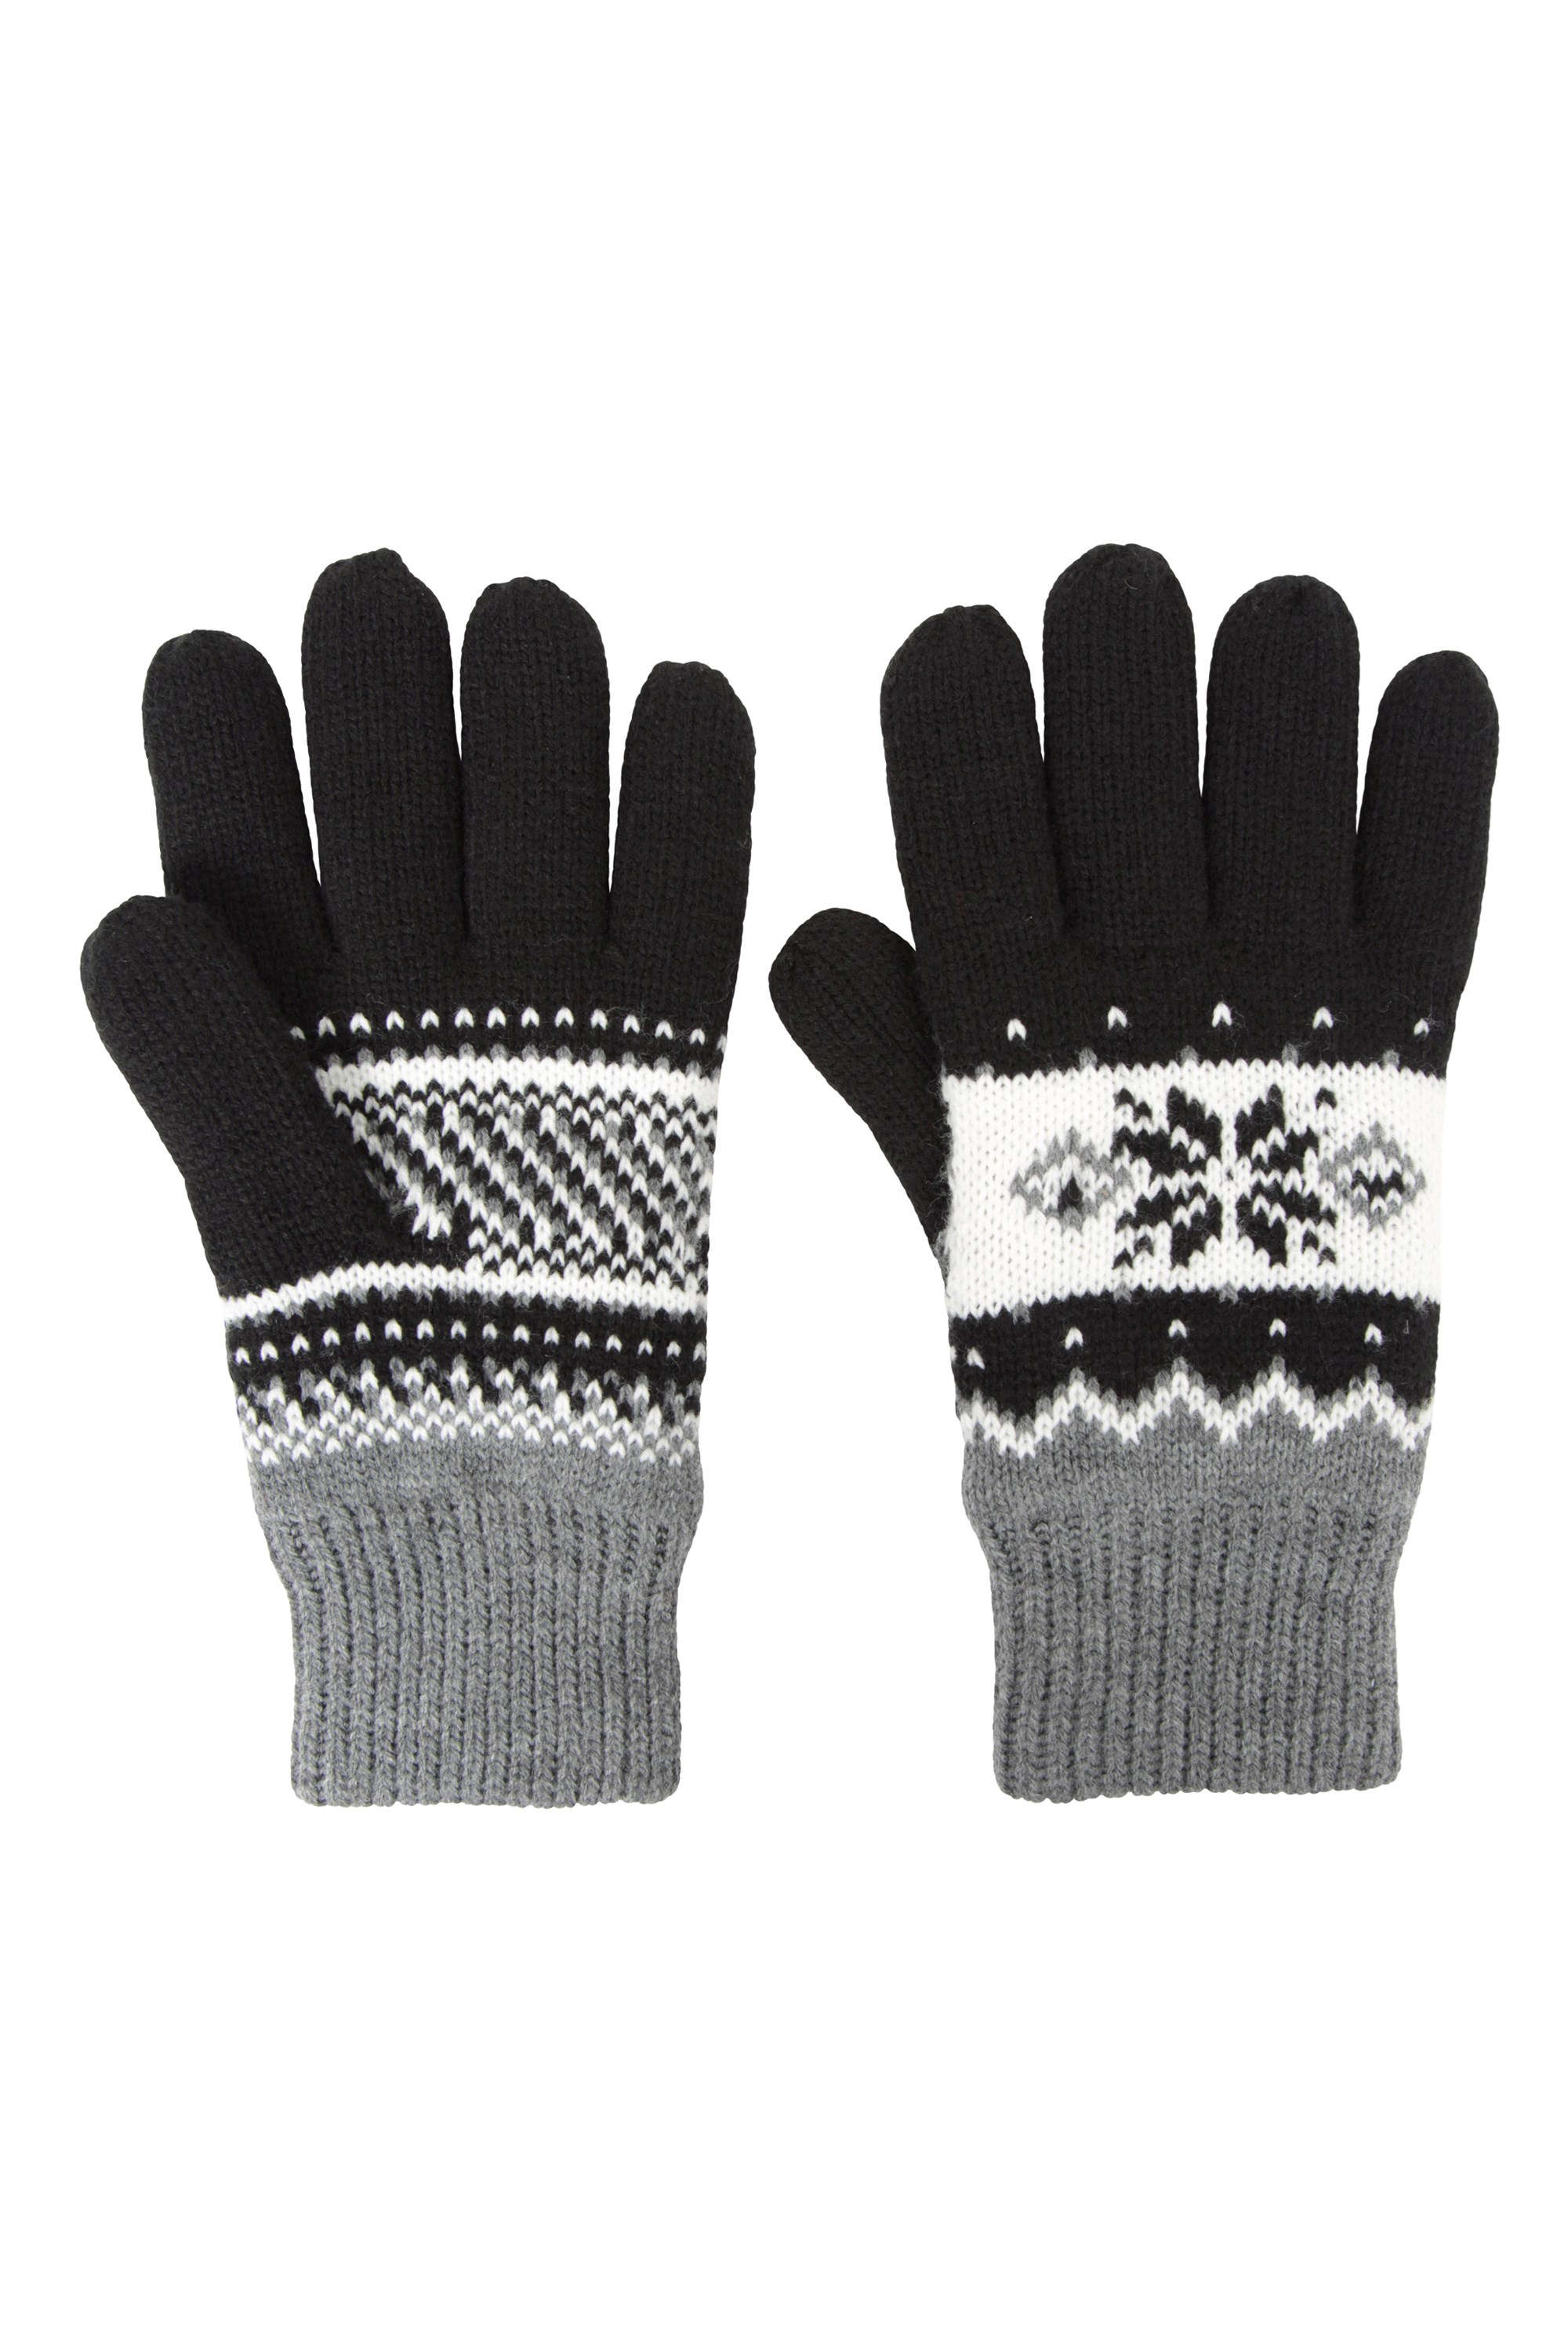 FLOSO® Ladies/Womens Thinsulate Fairisle Thermal Gloves 3M 40g 